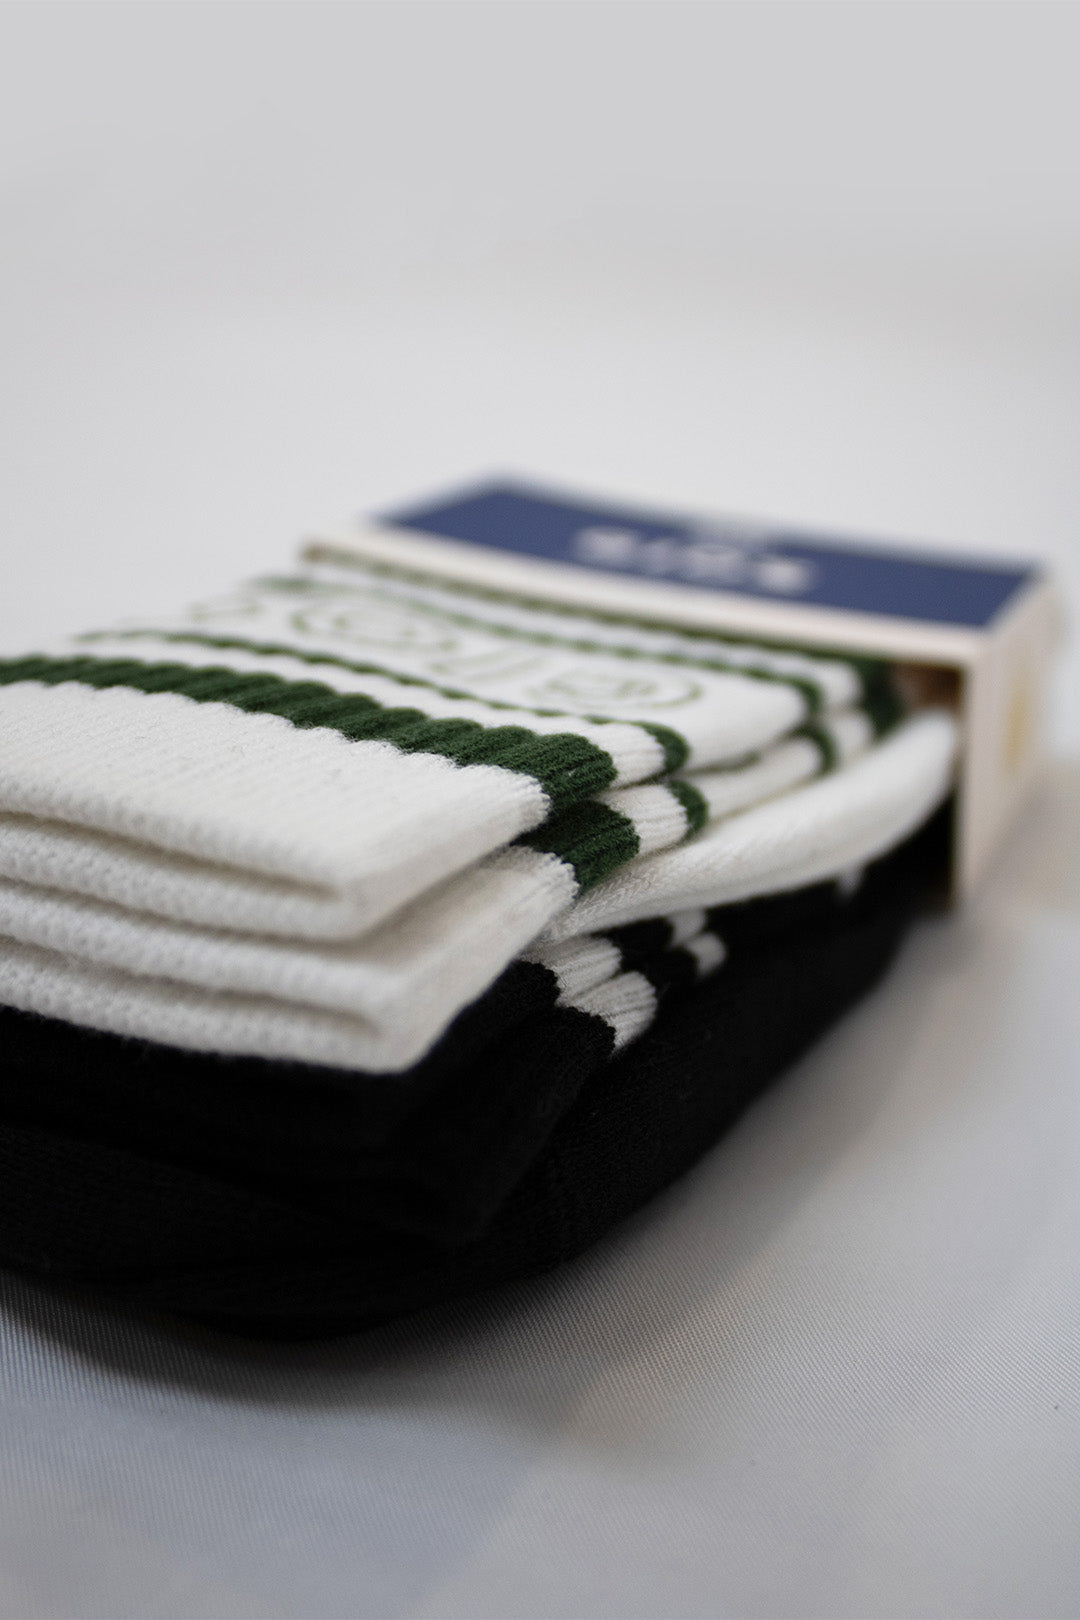 Socks white/green - black/white (2 pairs)